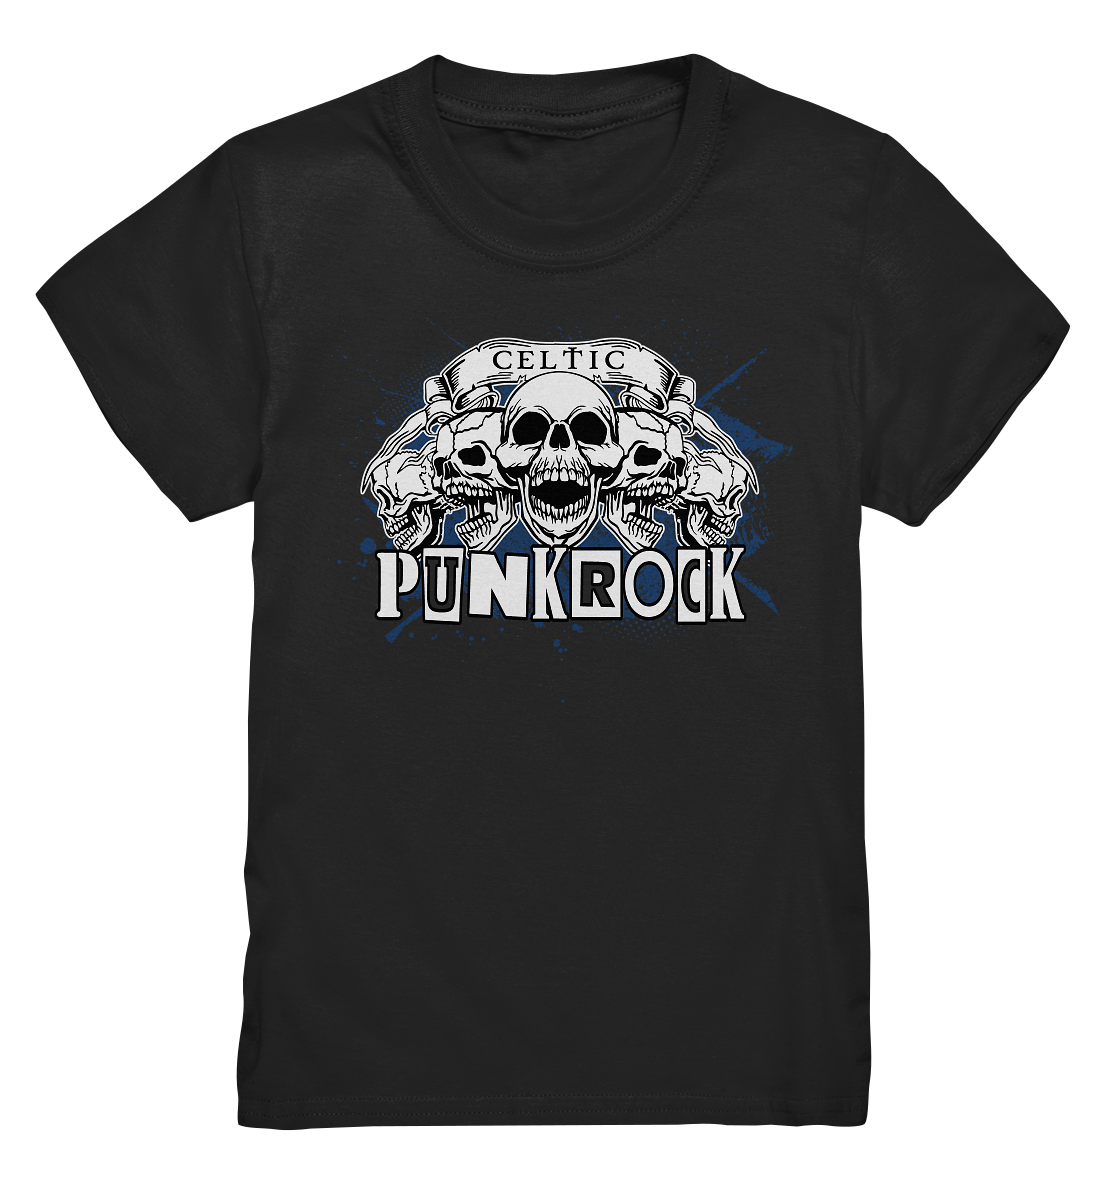 Celtic "Punkrock" - Kids Premium Shirt